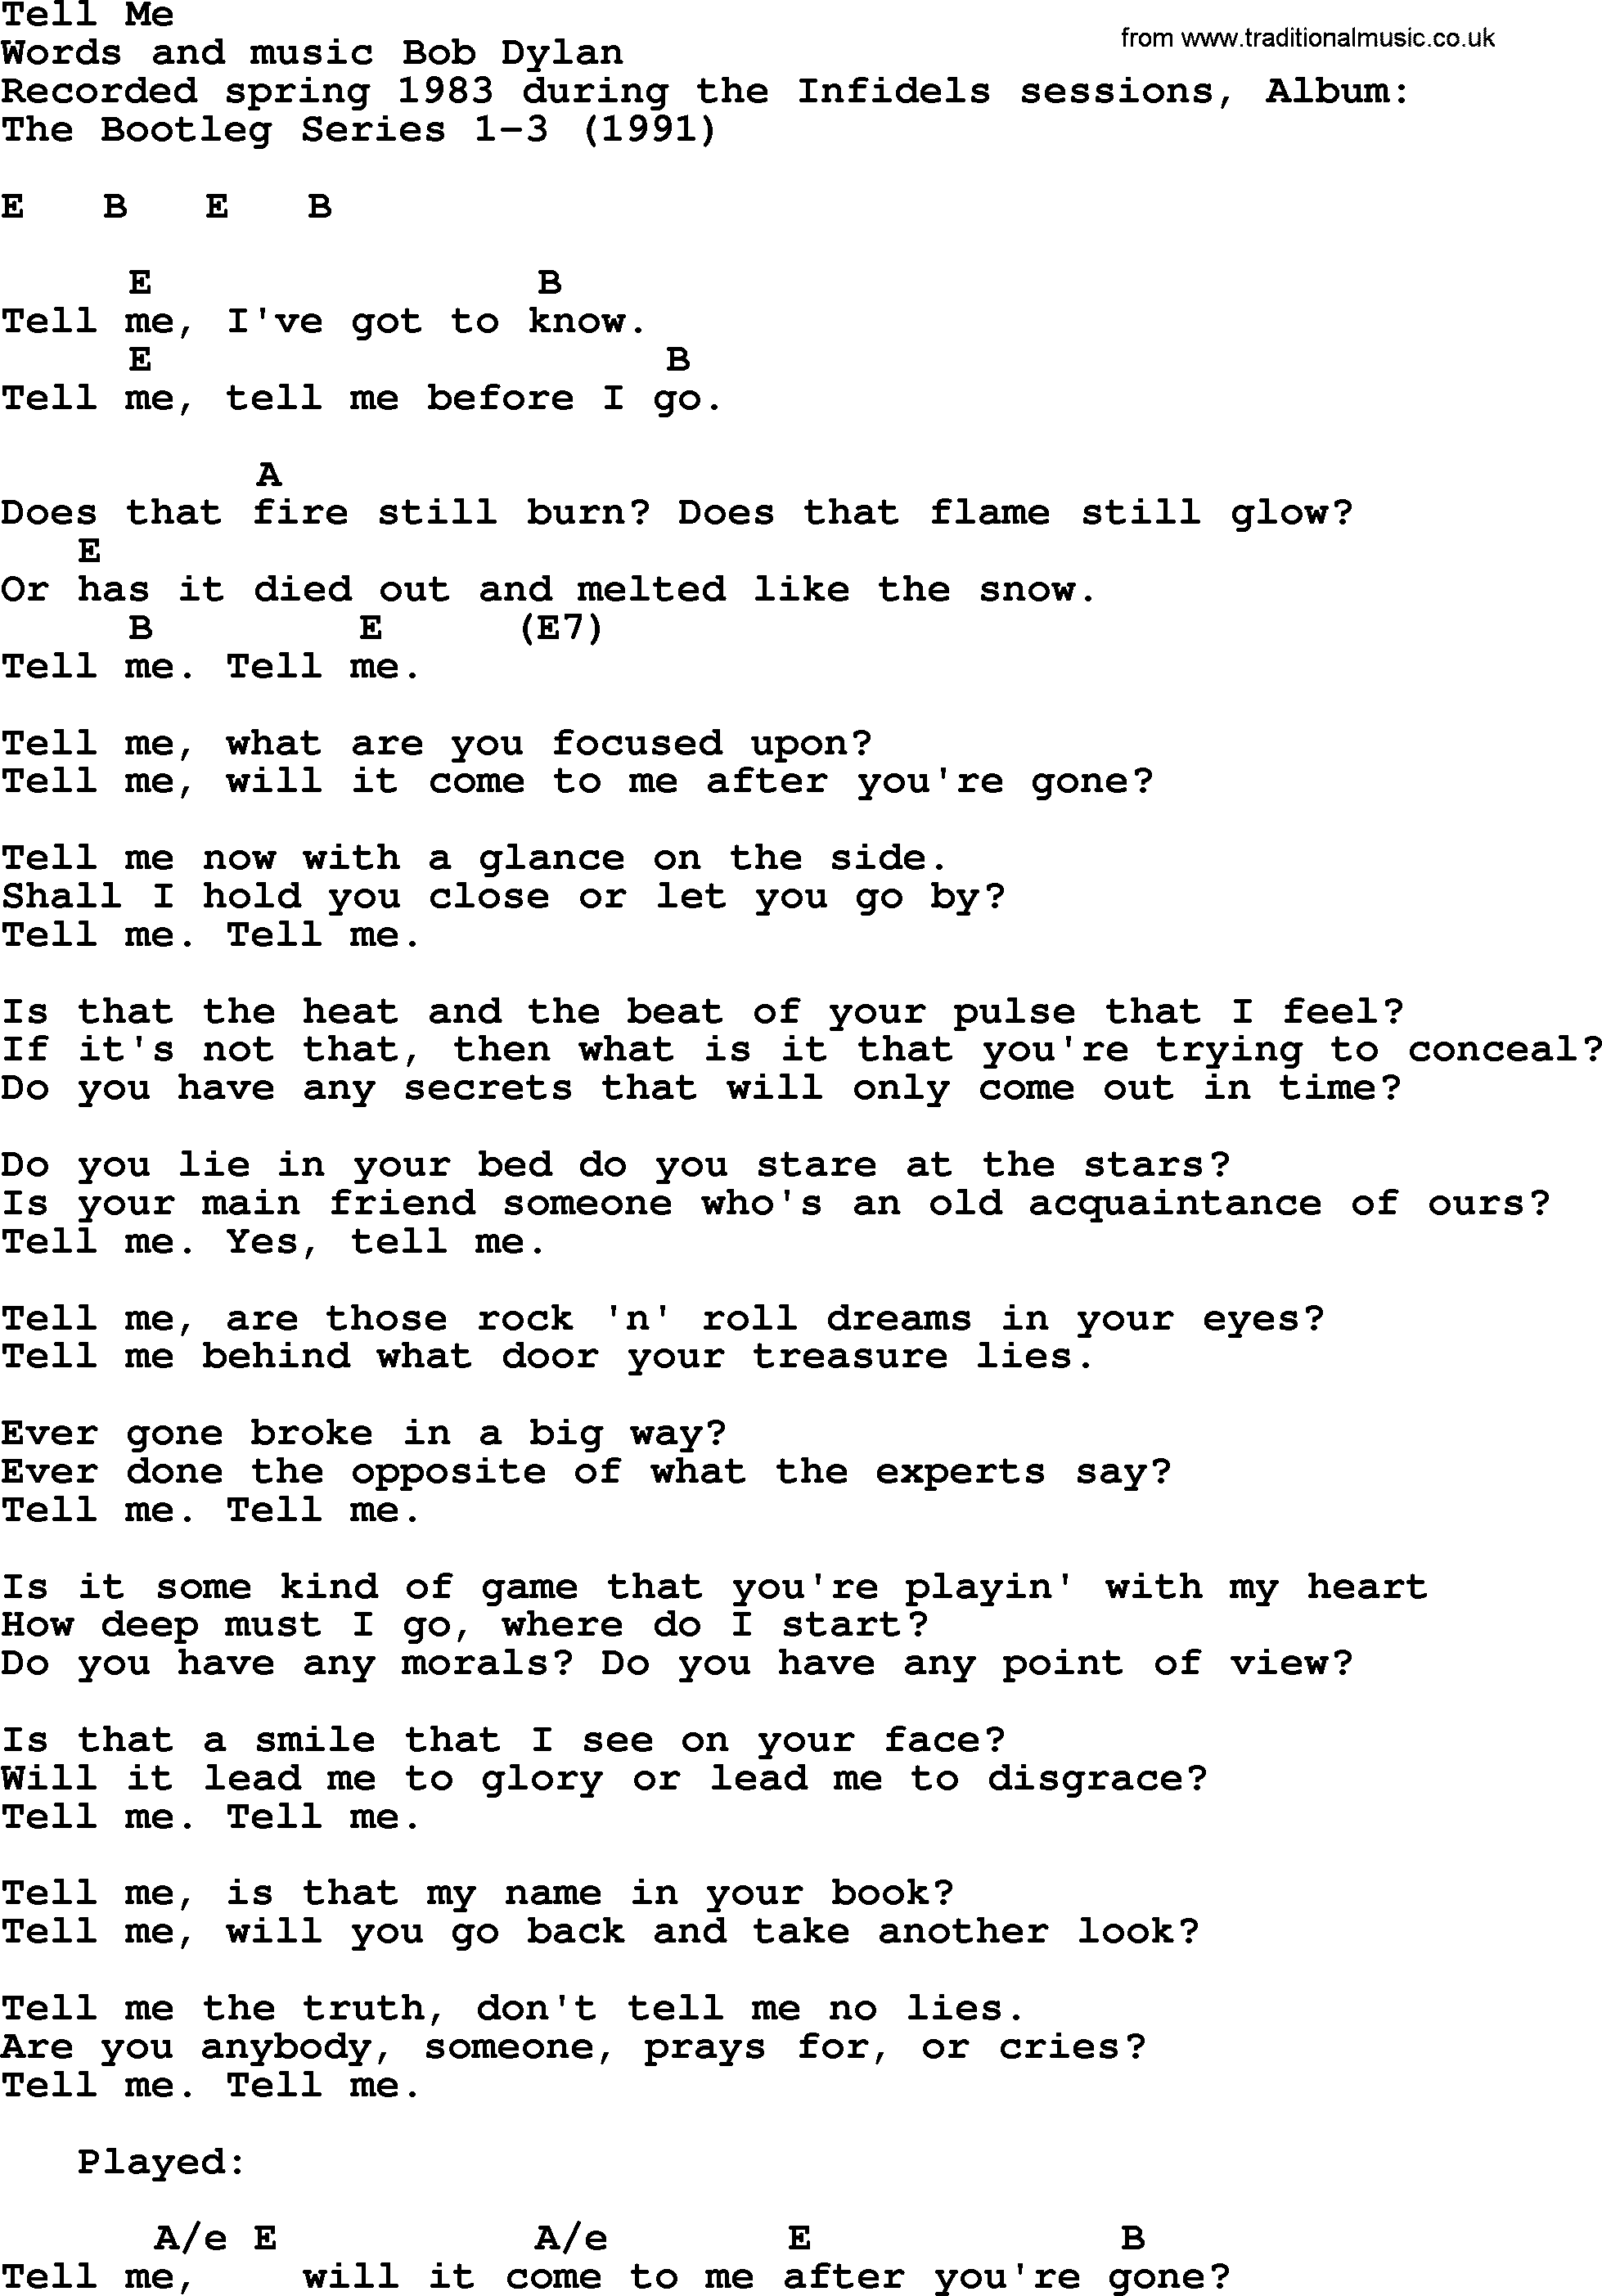 Bob Dylan song, lyrics with chords - Tell Me